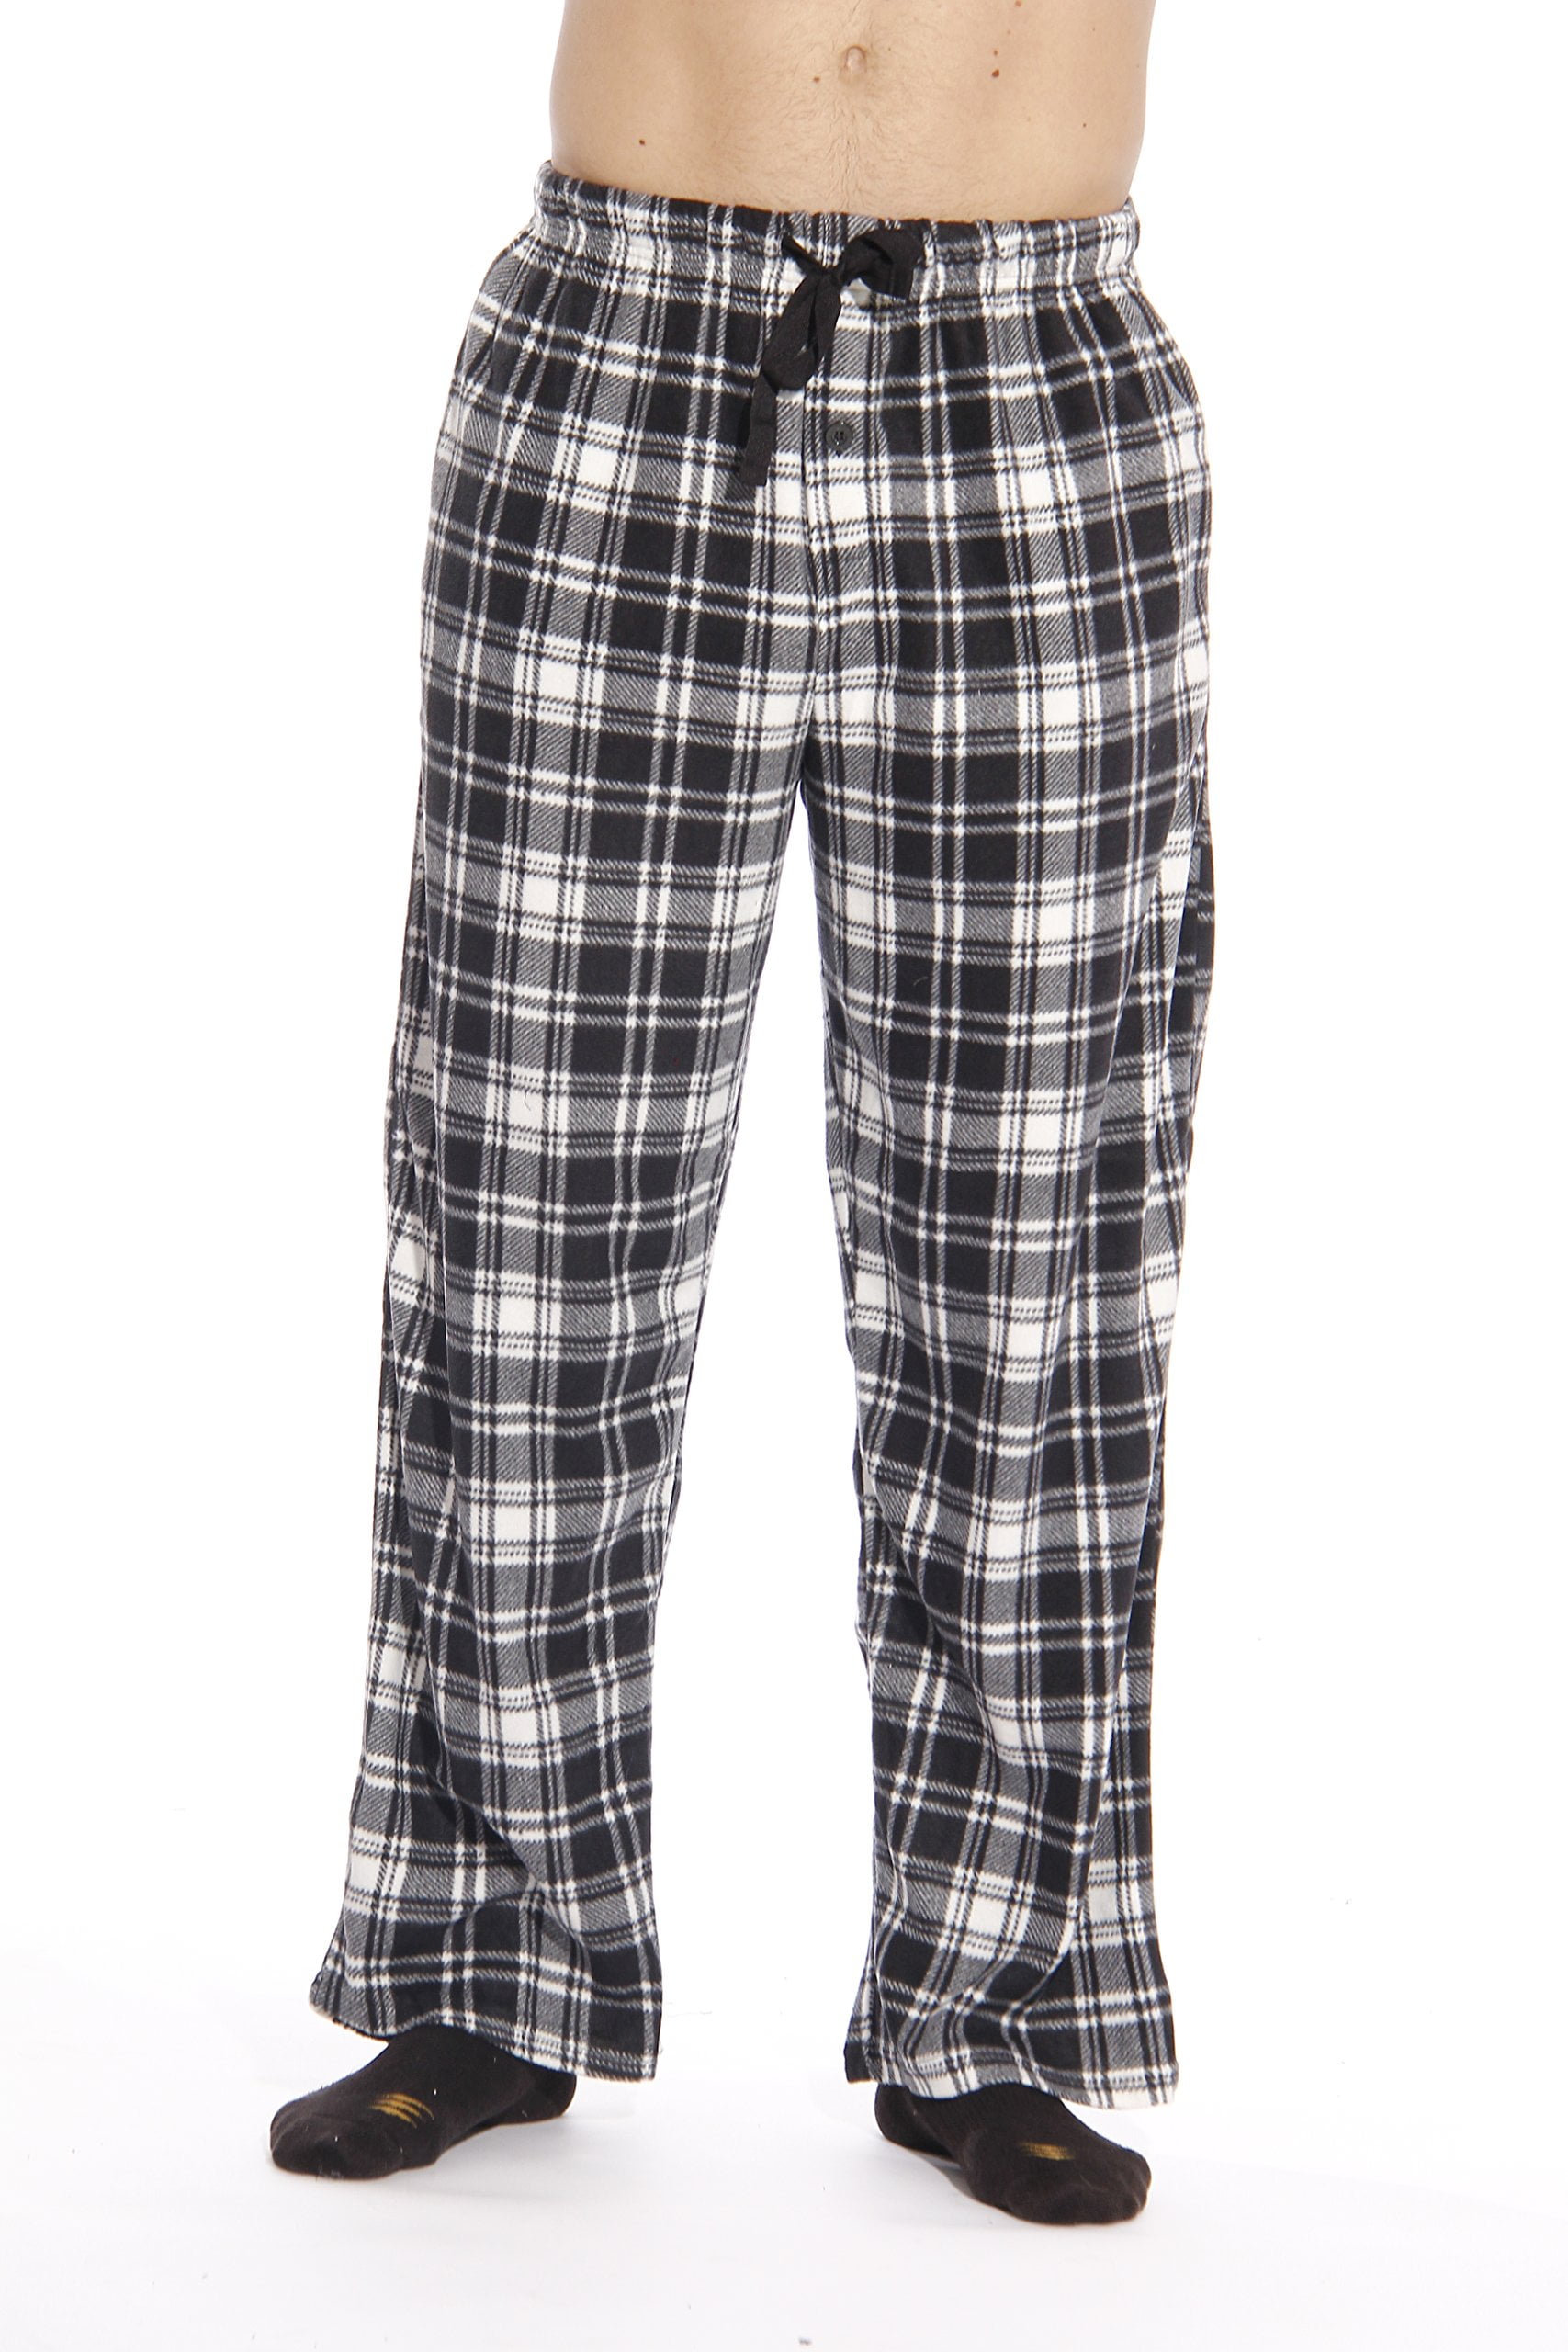 BESDEL Men’s Plaid Cotton Pajama Pants with Pockets Microfleece Lounge Sleepwear PJs Bottom with Drawstring S-XXL